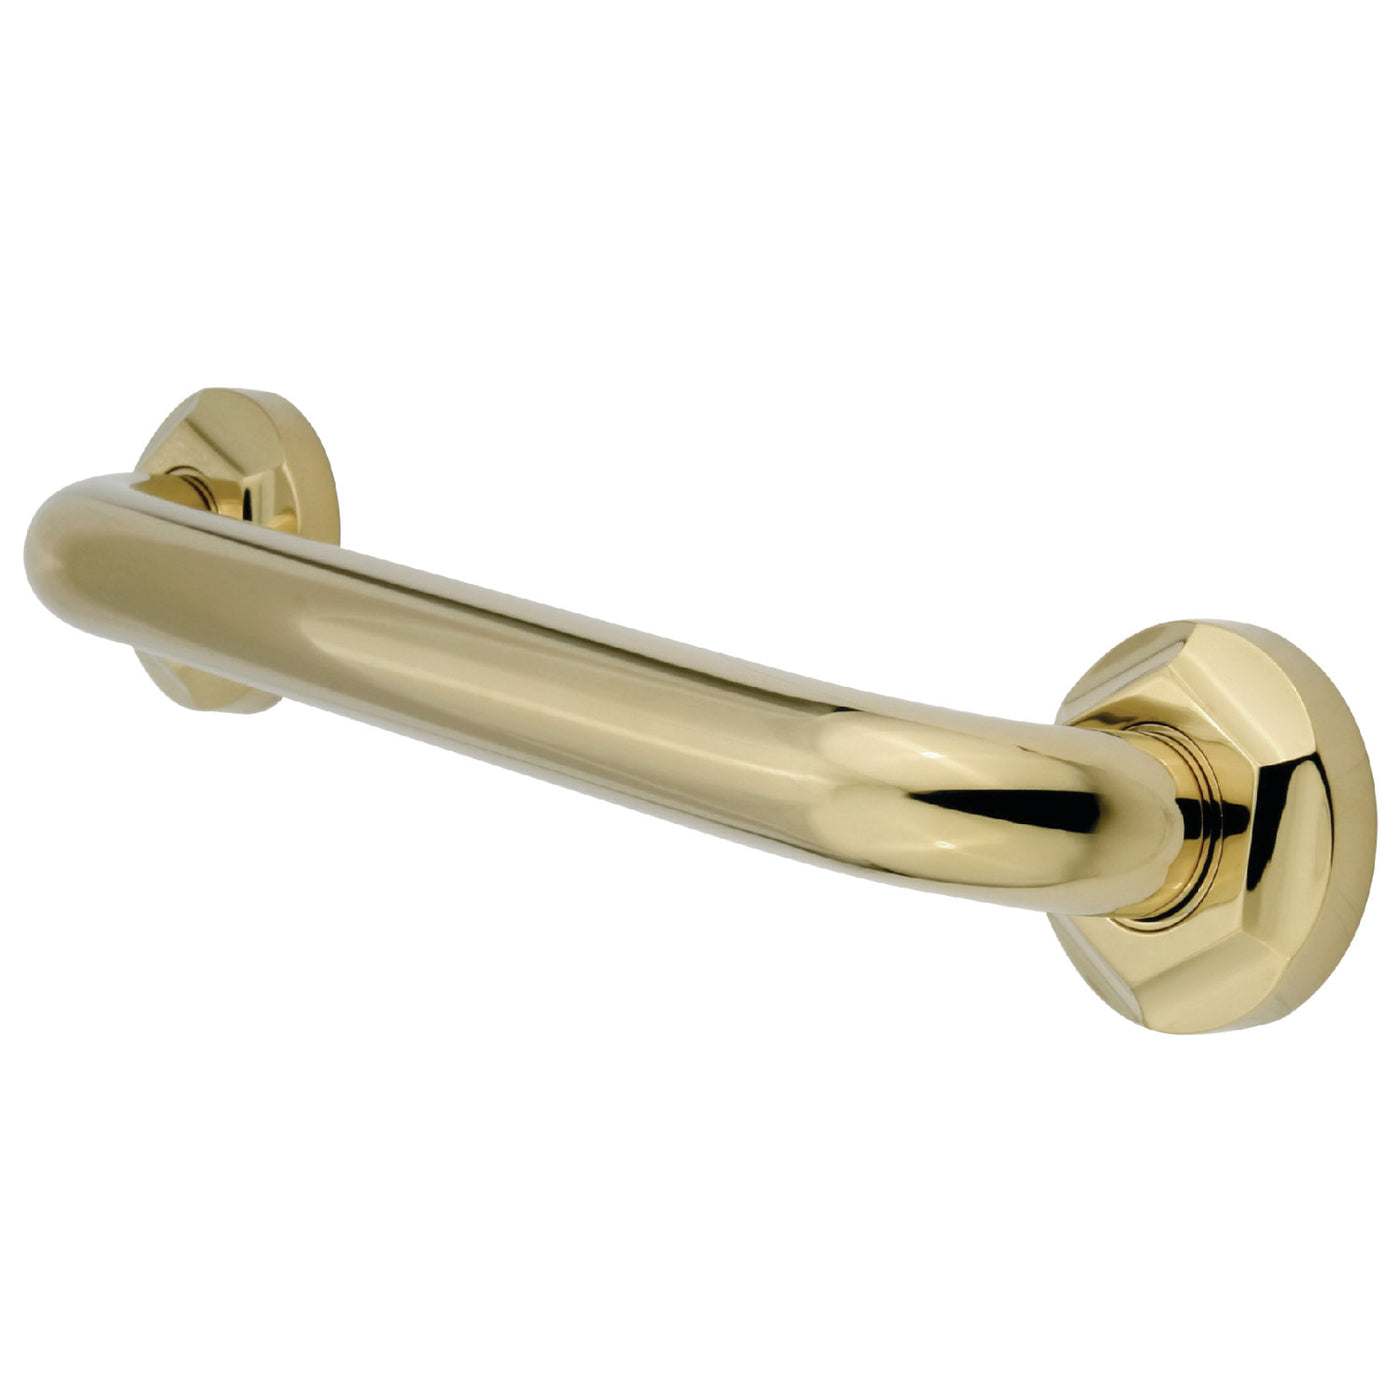 Elements of Design EDR714182 18-Inch x 1-1/4-Inch O.D Grab Bar, Polished Brass